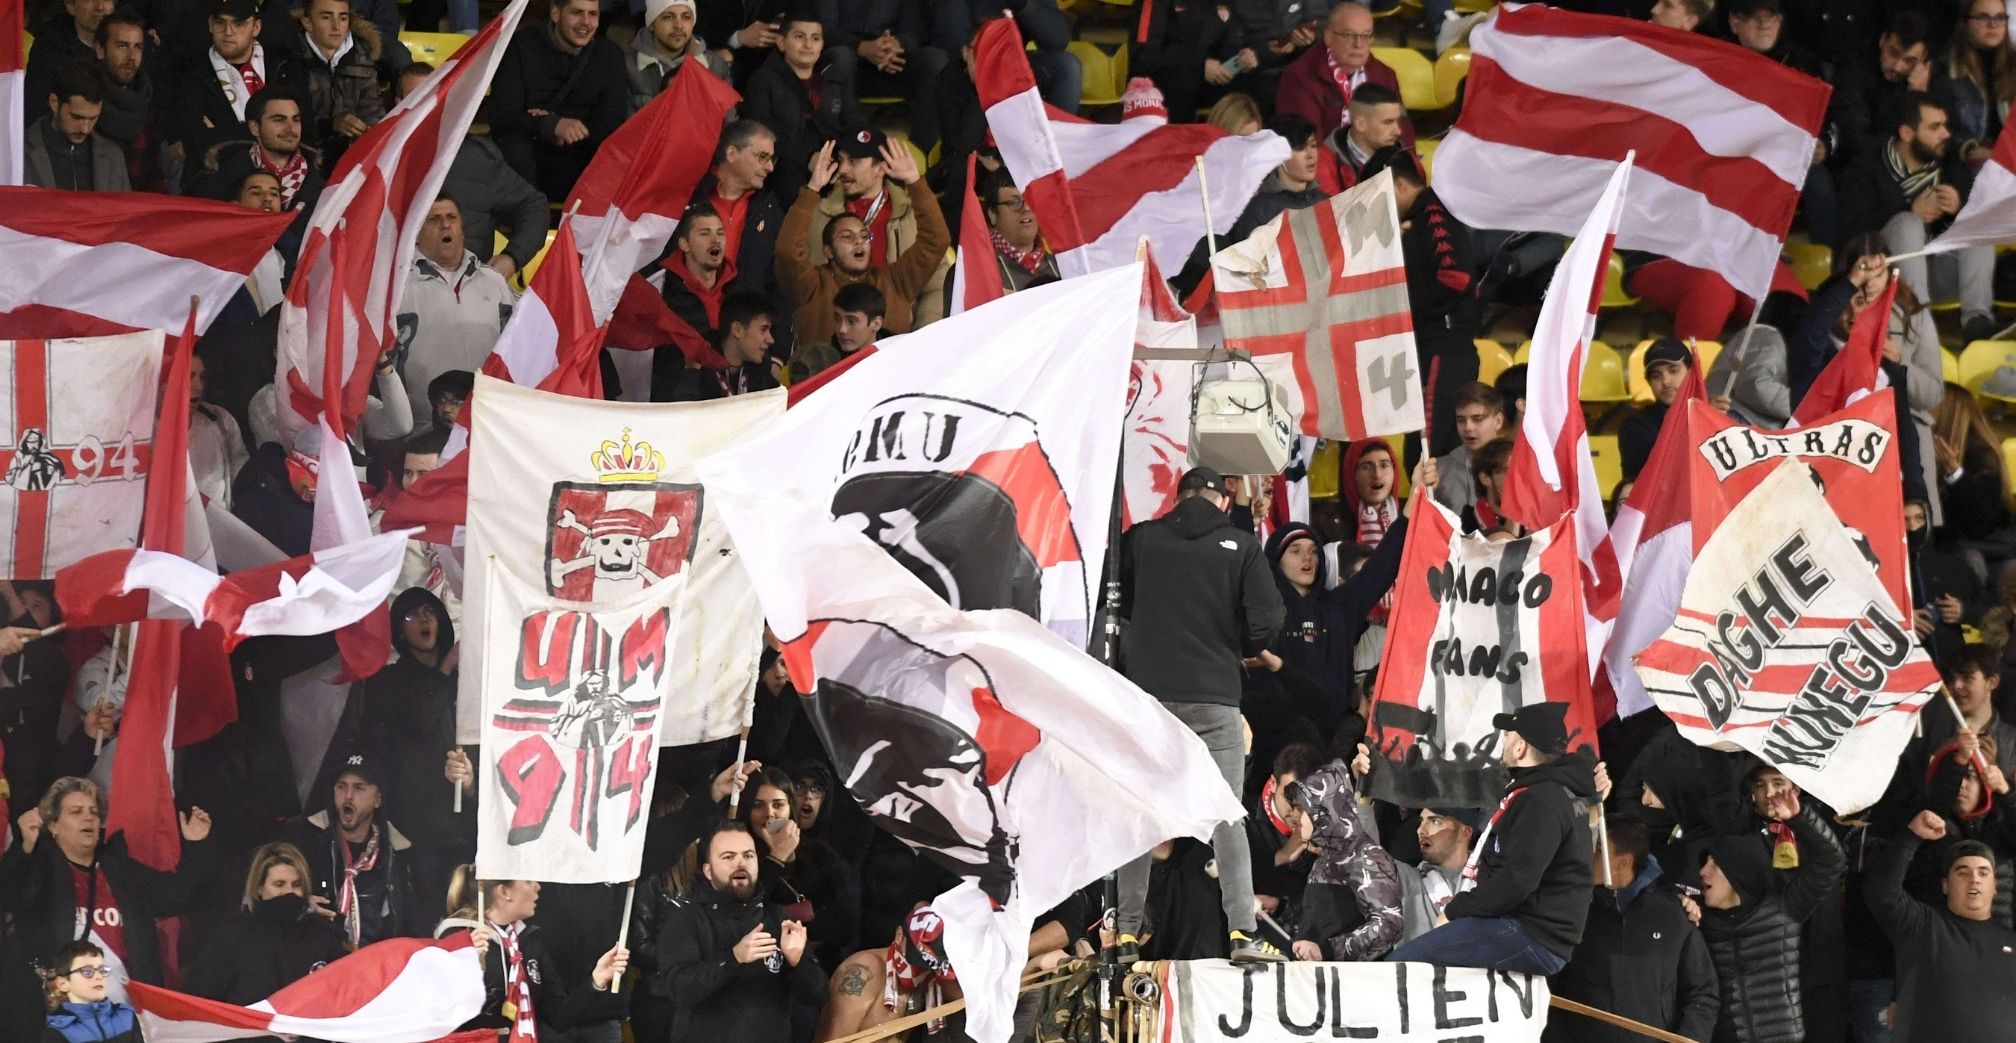 Monaco fans, flags, banners